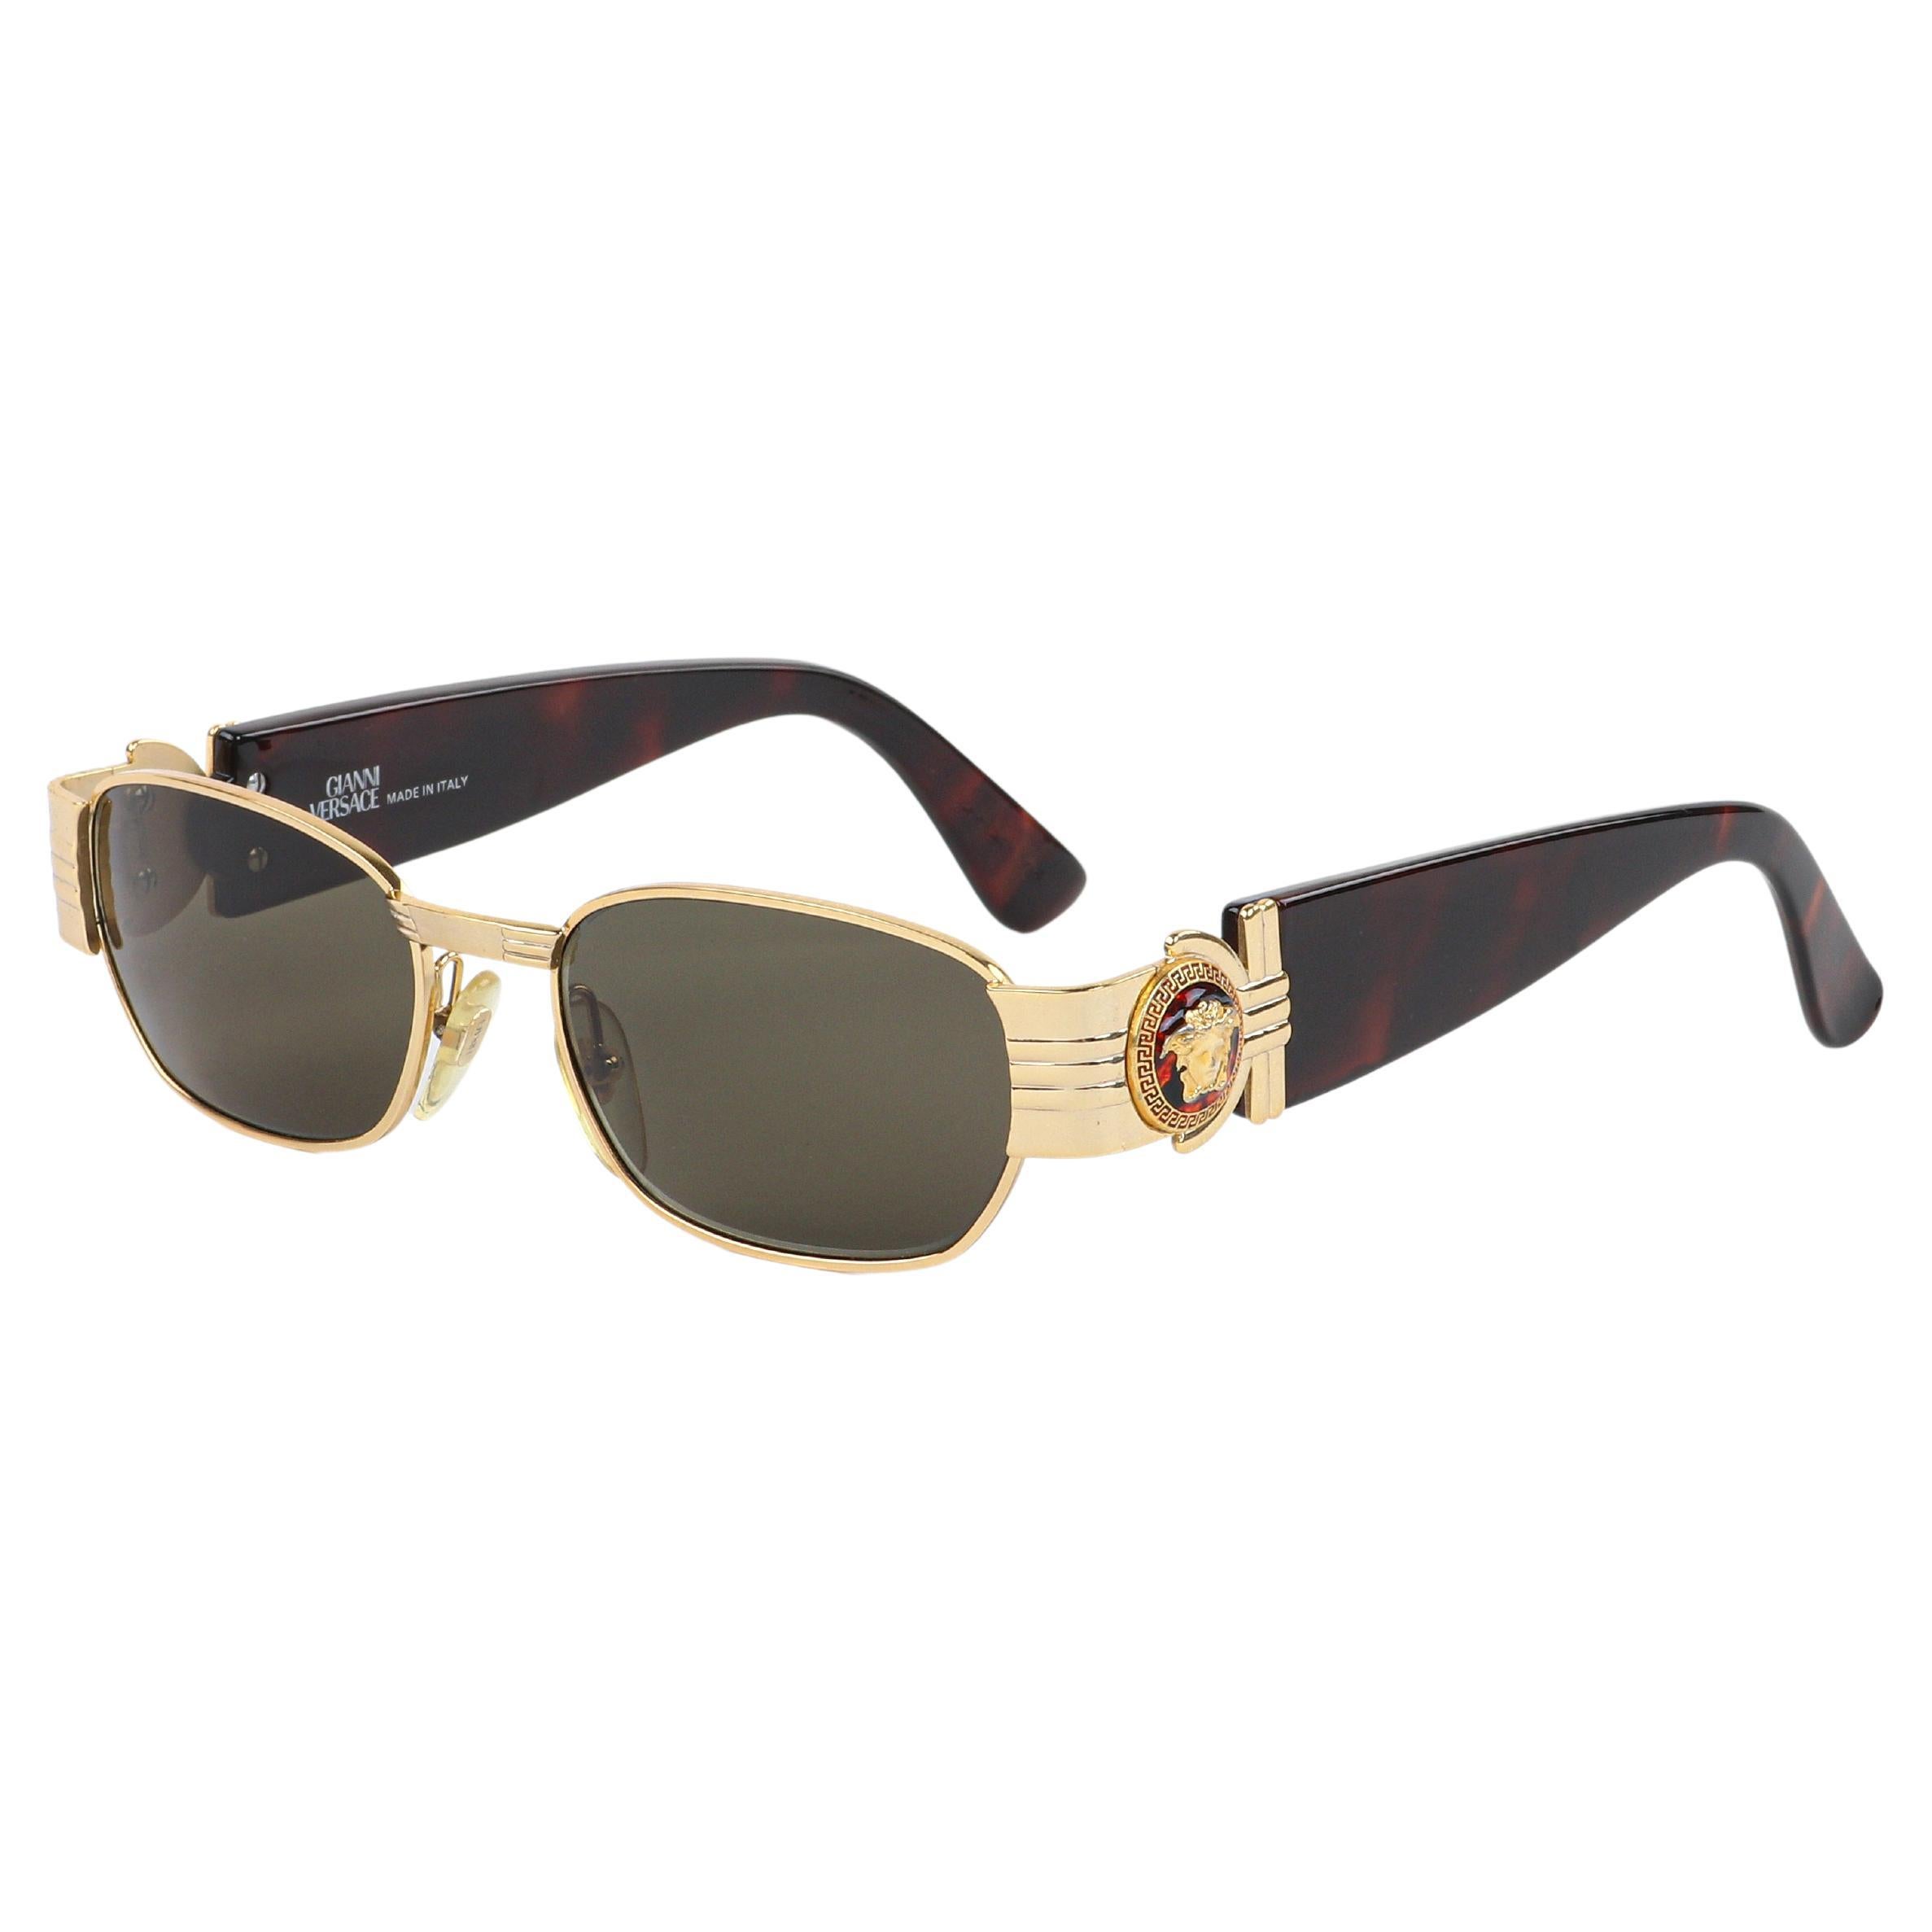 GIANNI VERSACE c.1990s Gold Tortoiseshell Medusa Emblem Oval Shaped Sunglasses For Sale